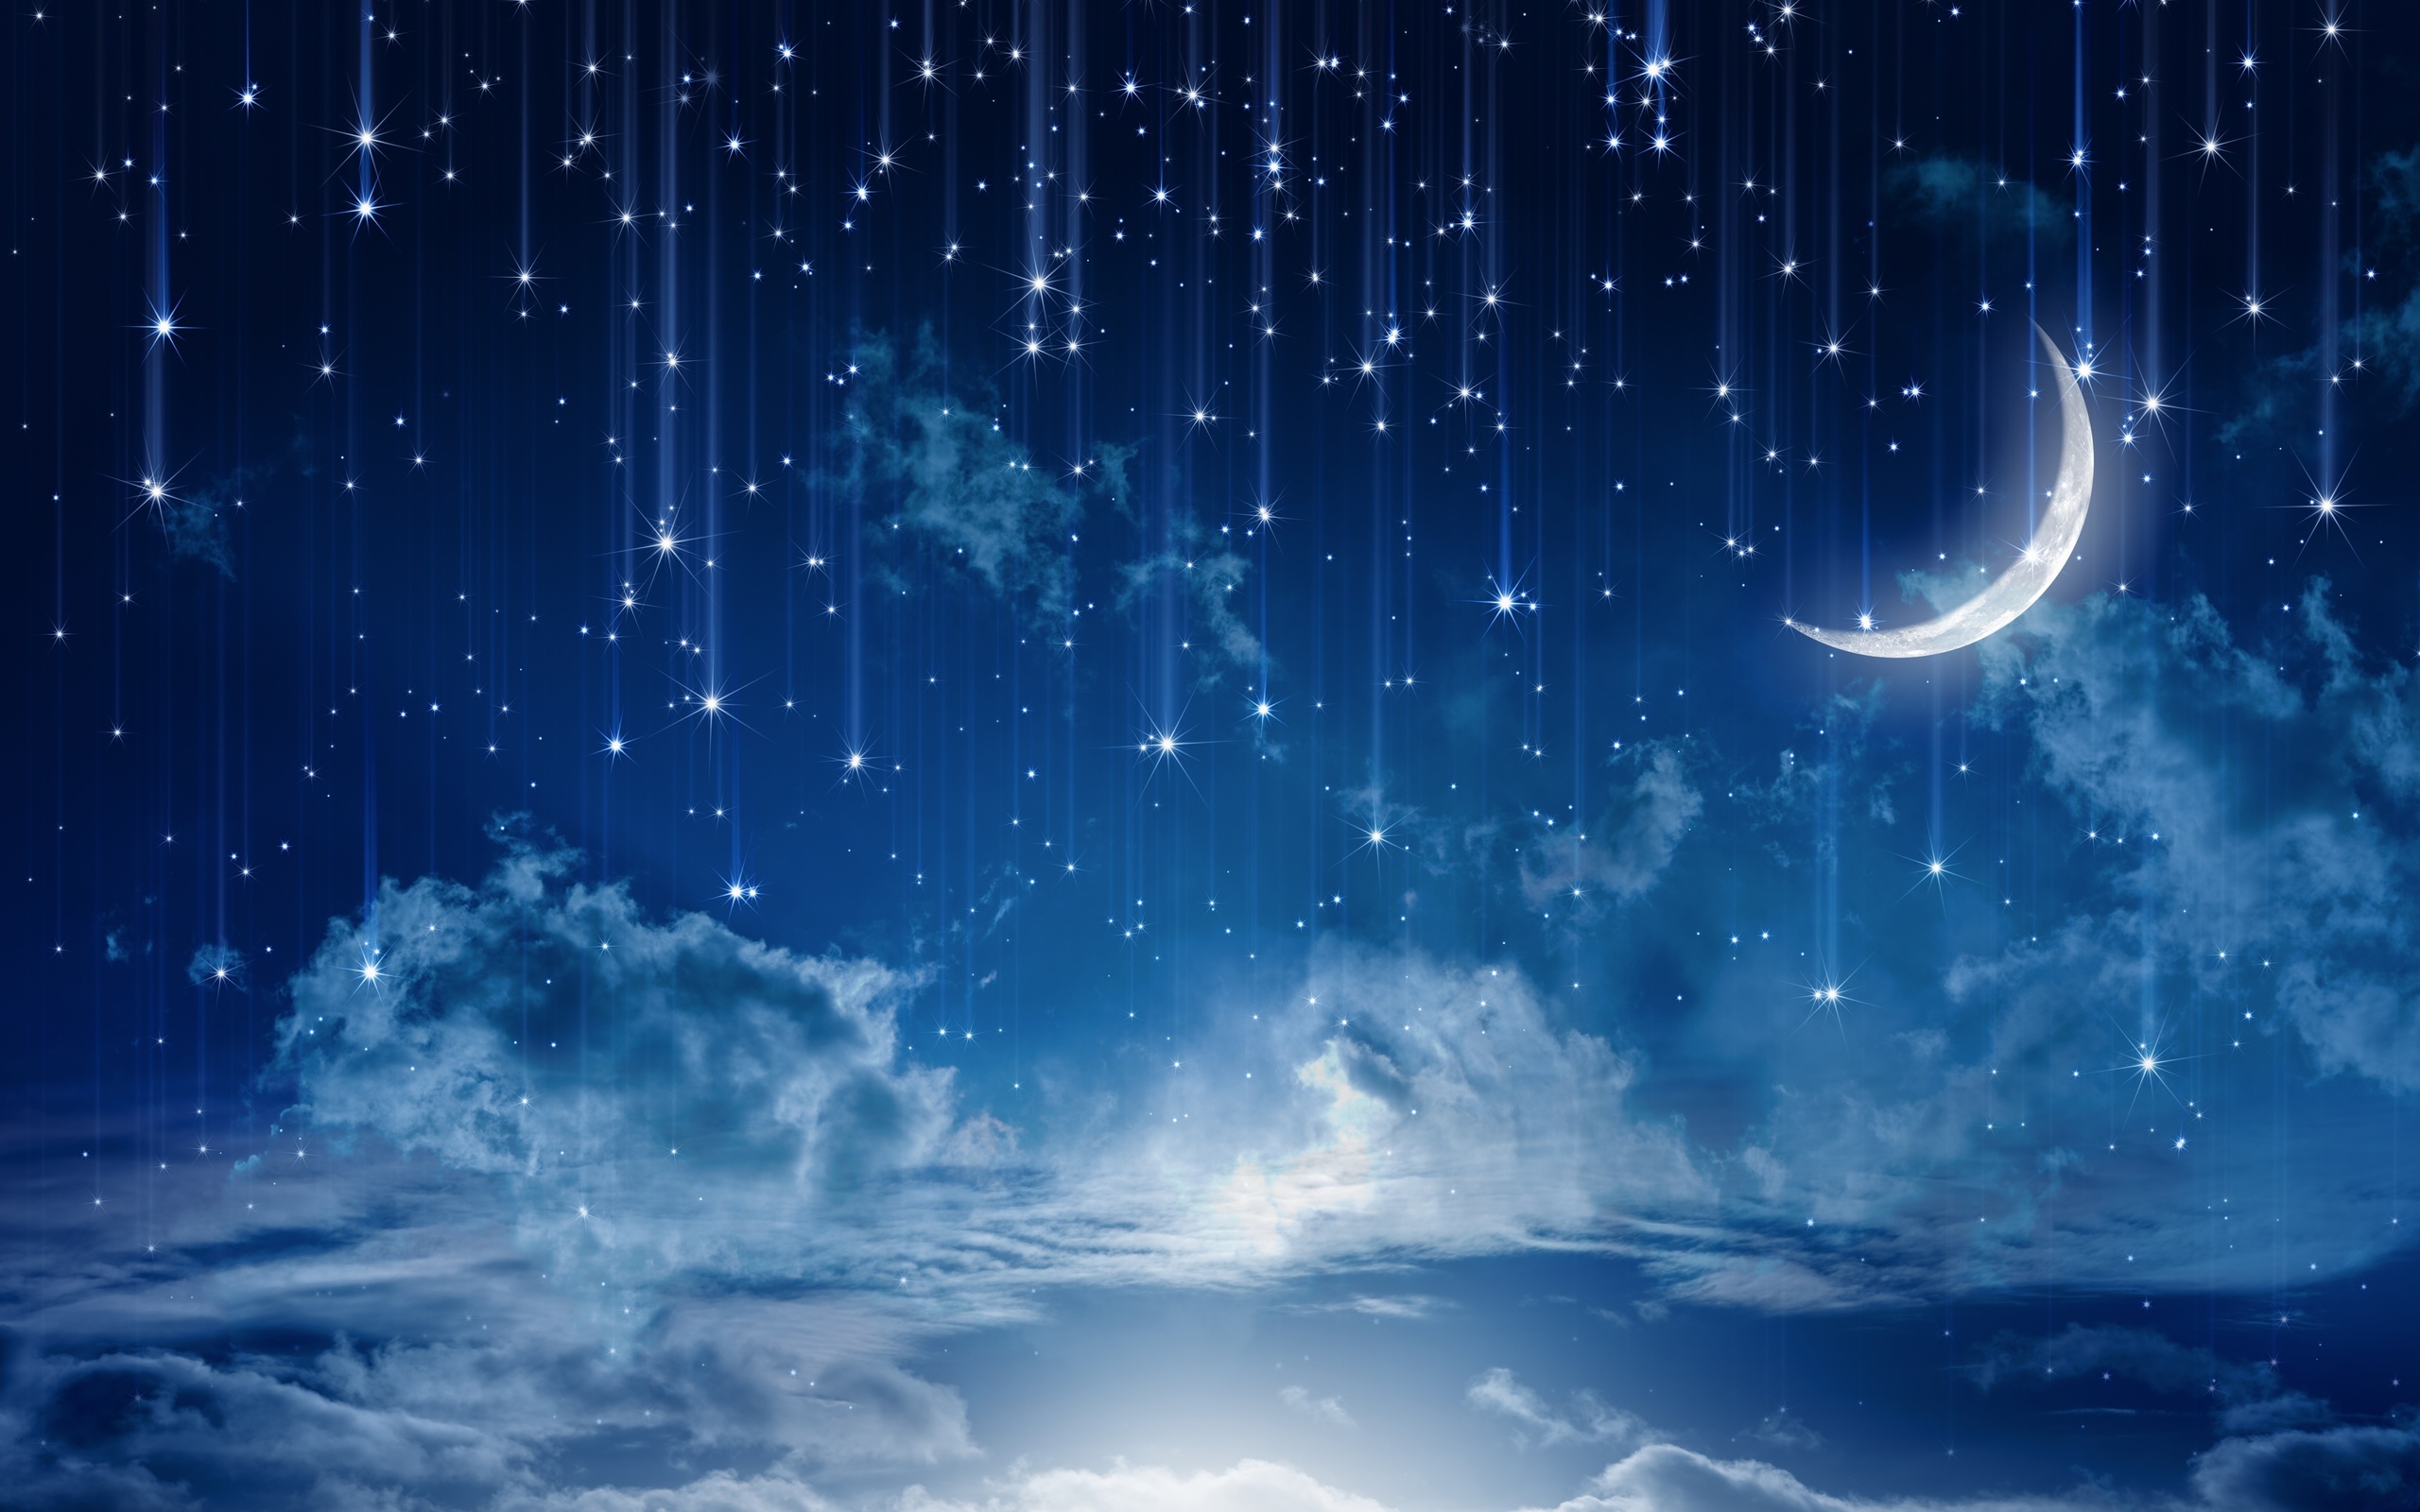 Sky moonlight nature night stars clouds rain landscape moon wallpaper